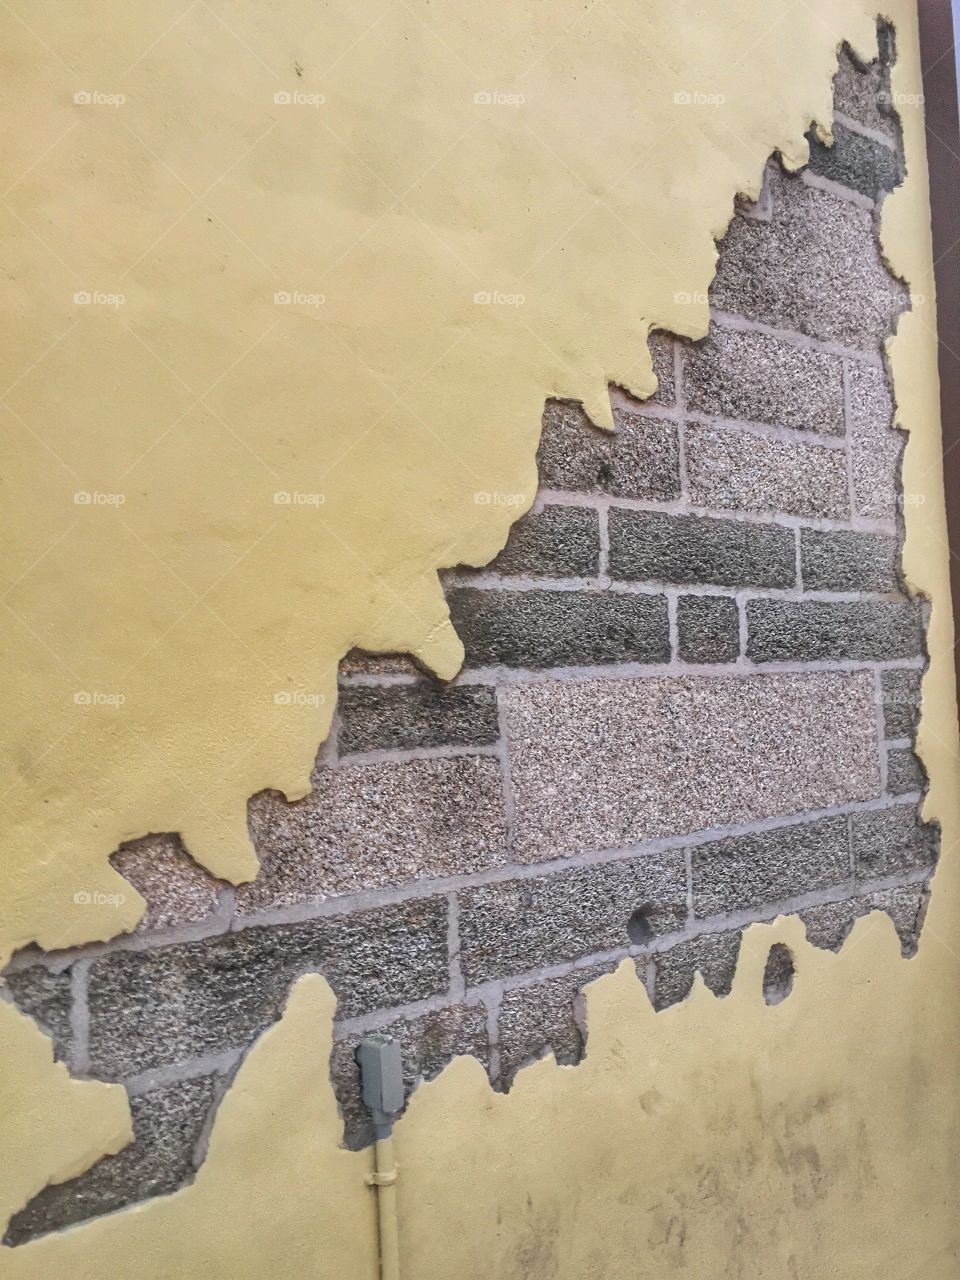 Behind the wall. An exposed brick wall